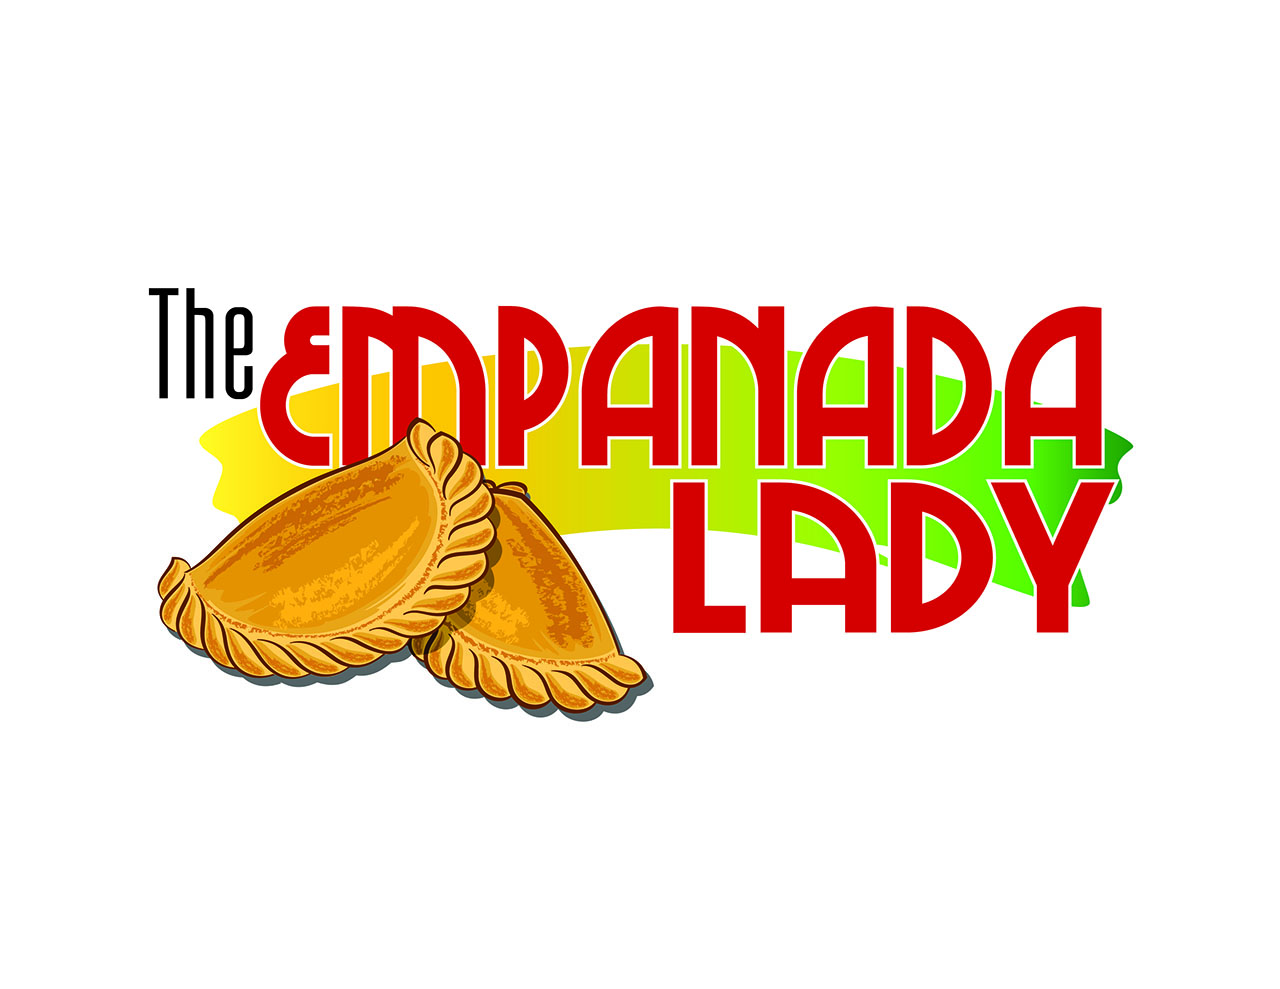 st-thomas-graphic-design-logo-empanada-lady